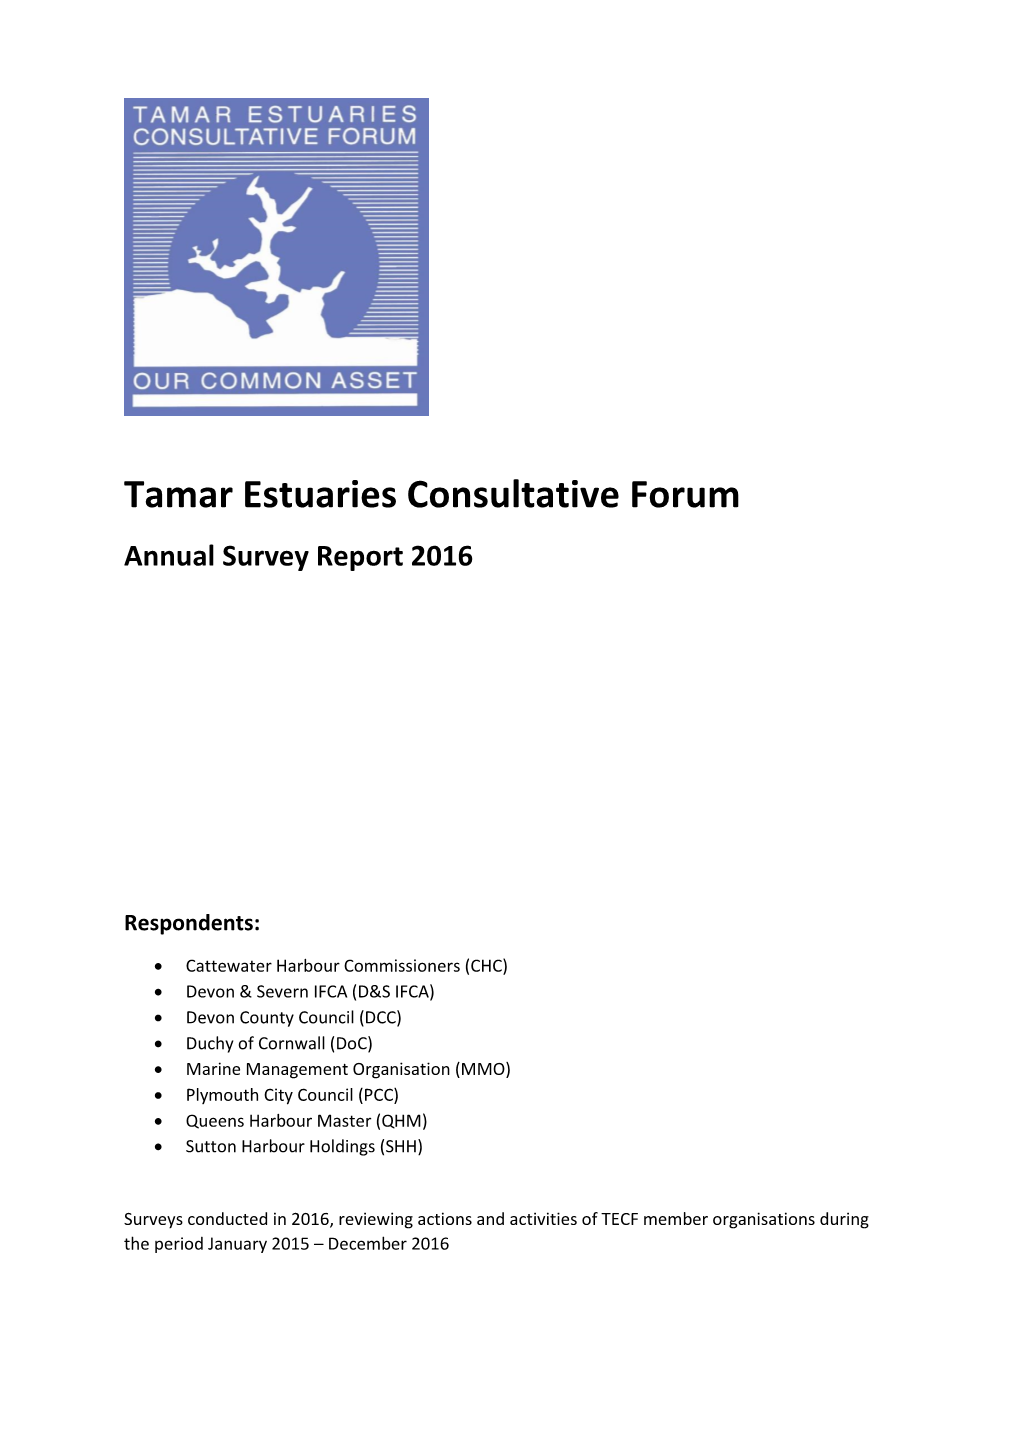 TECF Annual Report 2015 to 2016